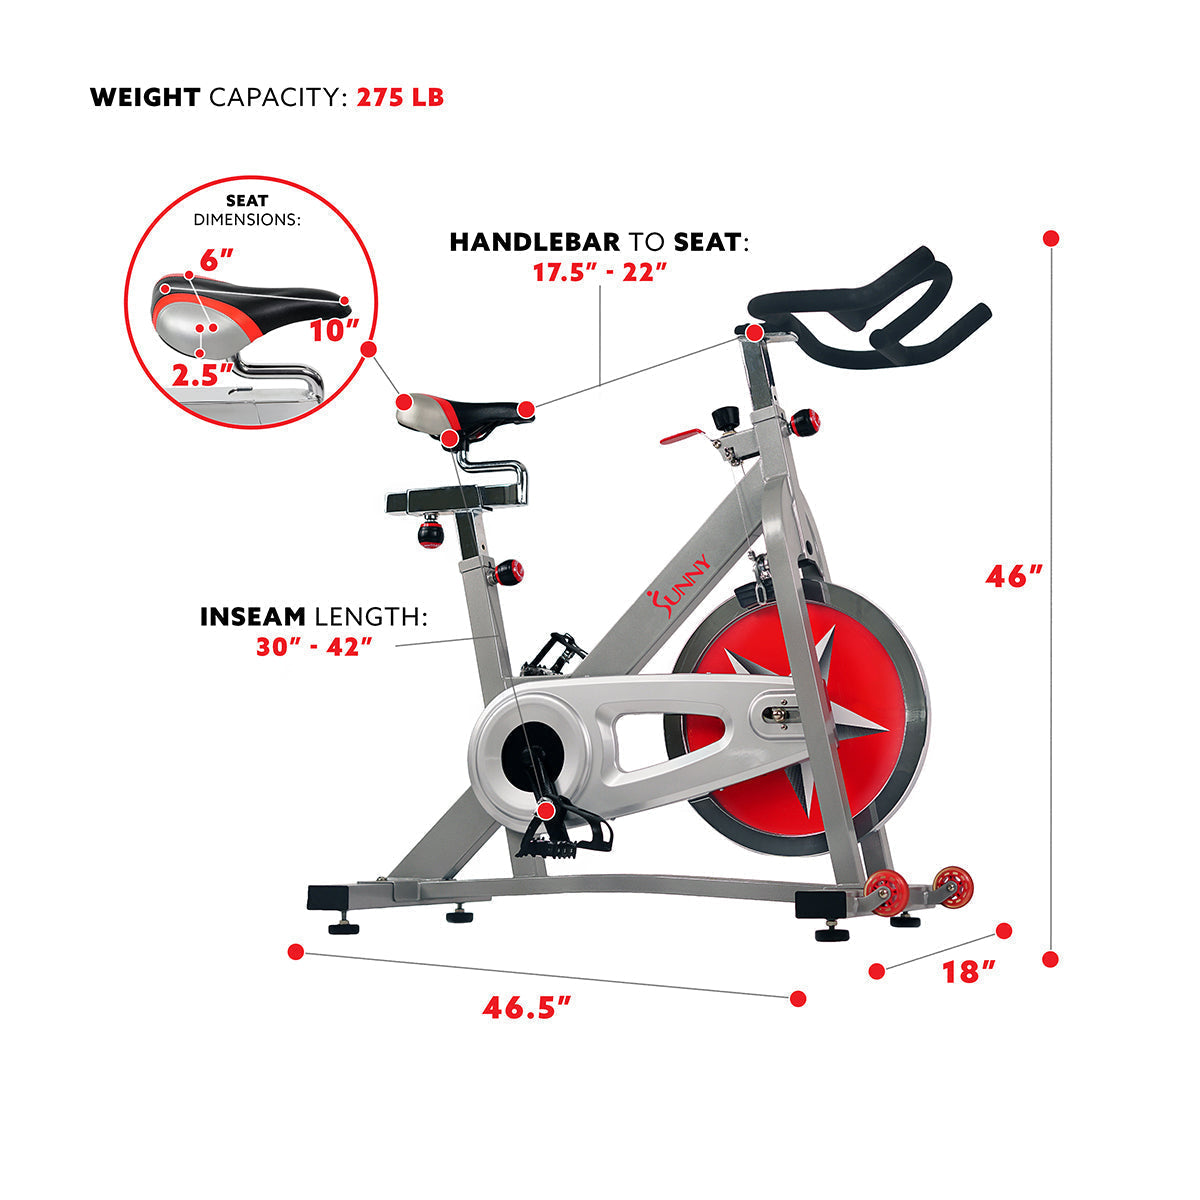 40 lb Flywheel Chain Drive Pro Indoor Cycling Exercise Bike